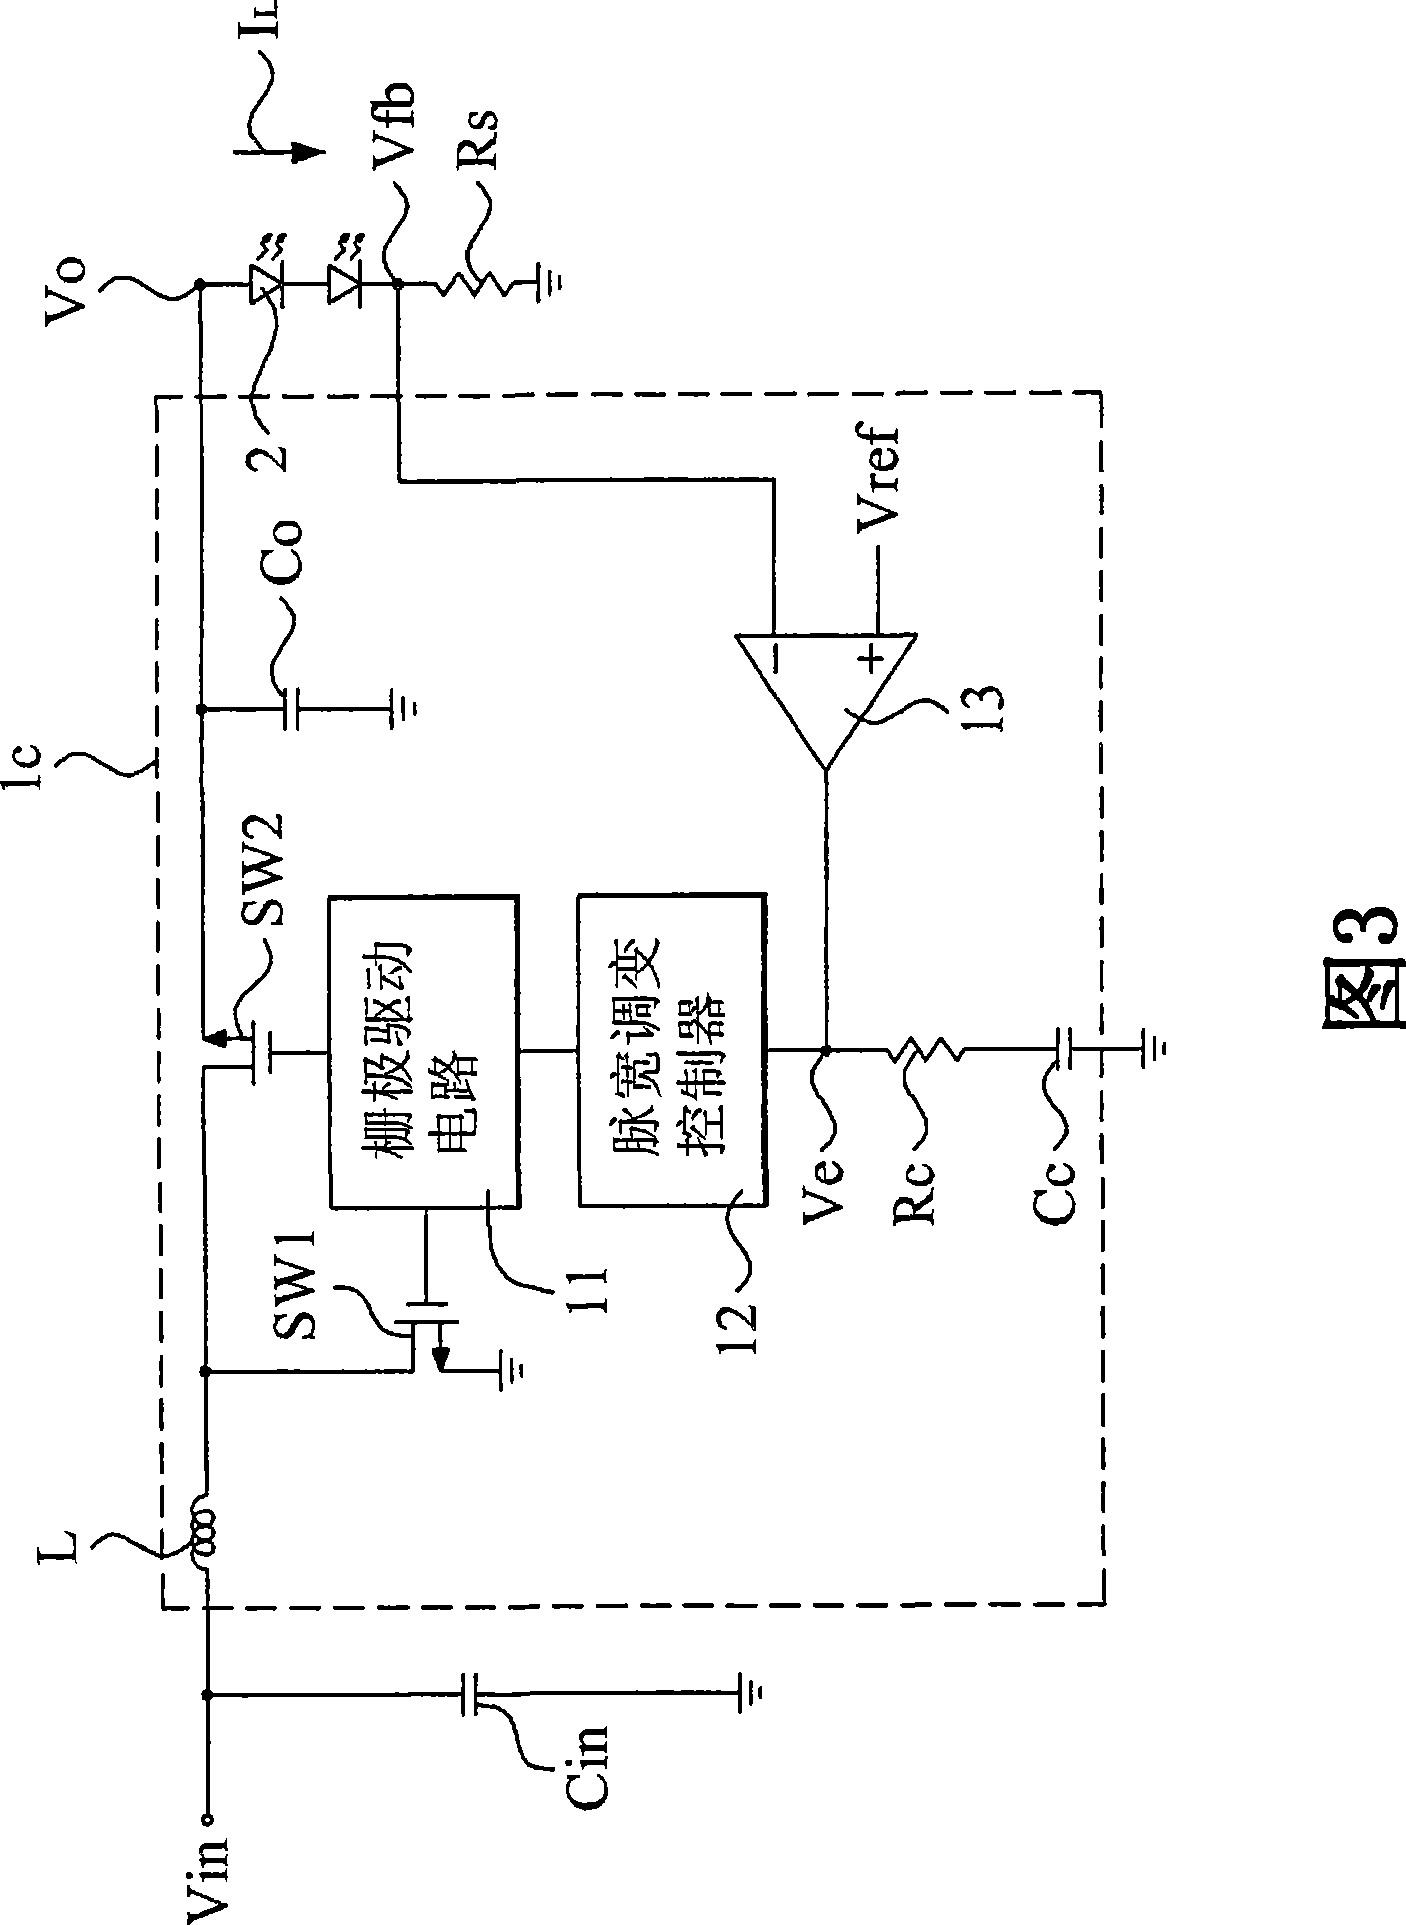 Constant current regulating circuit having current sensing loop